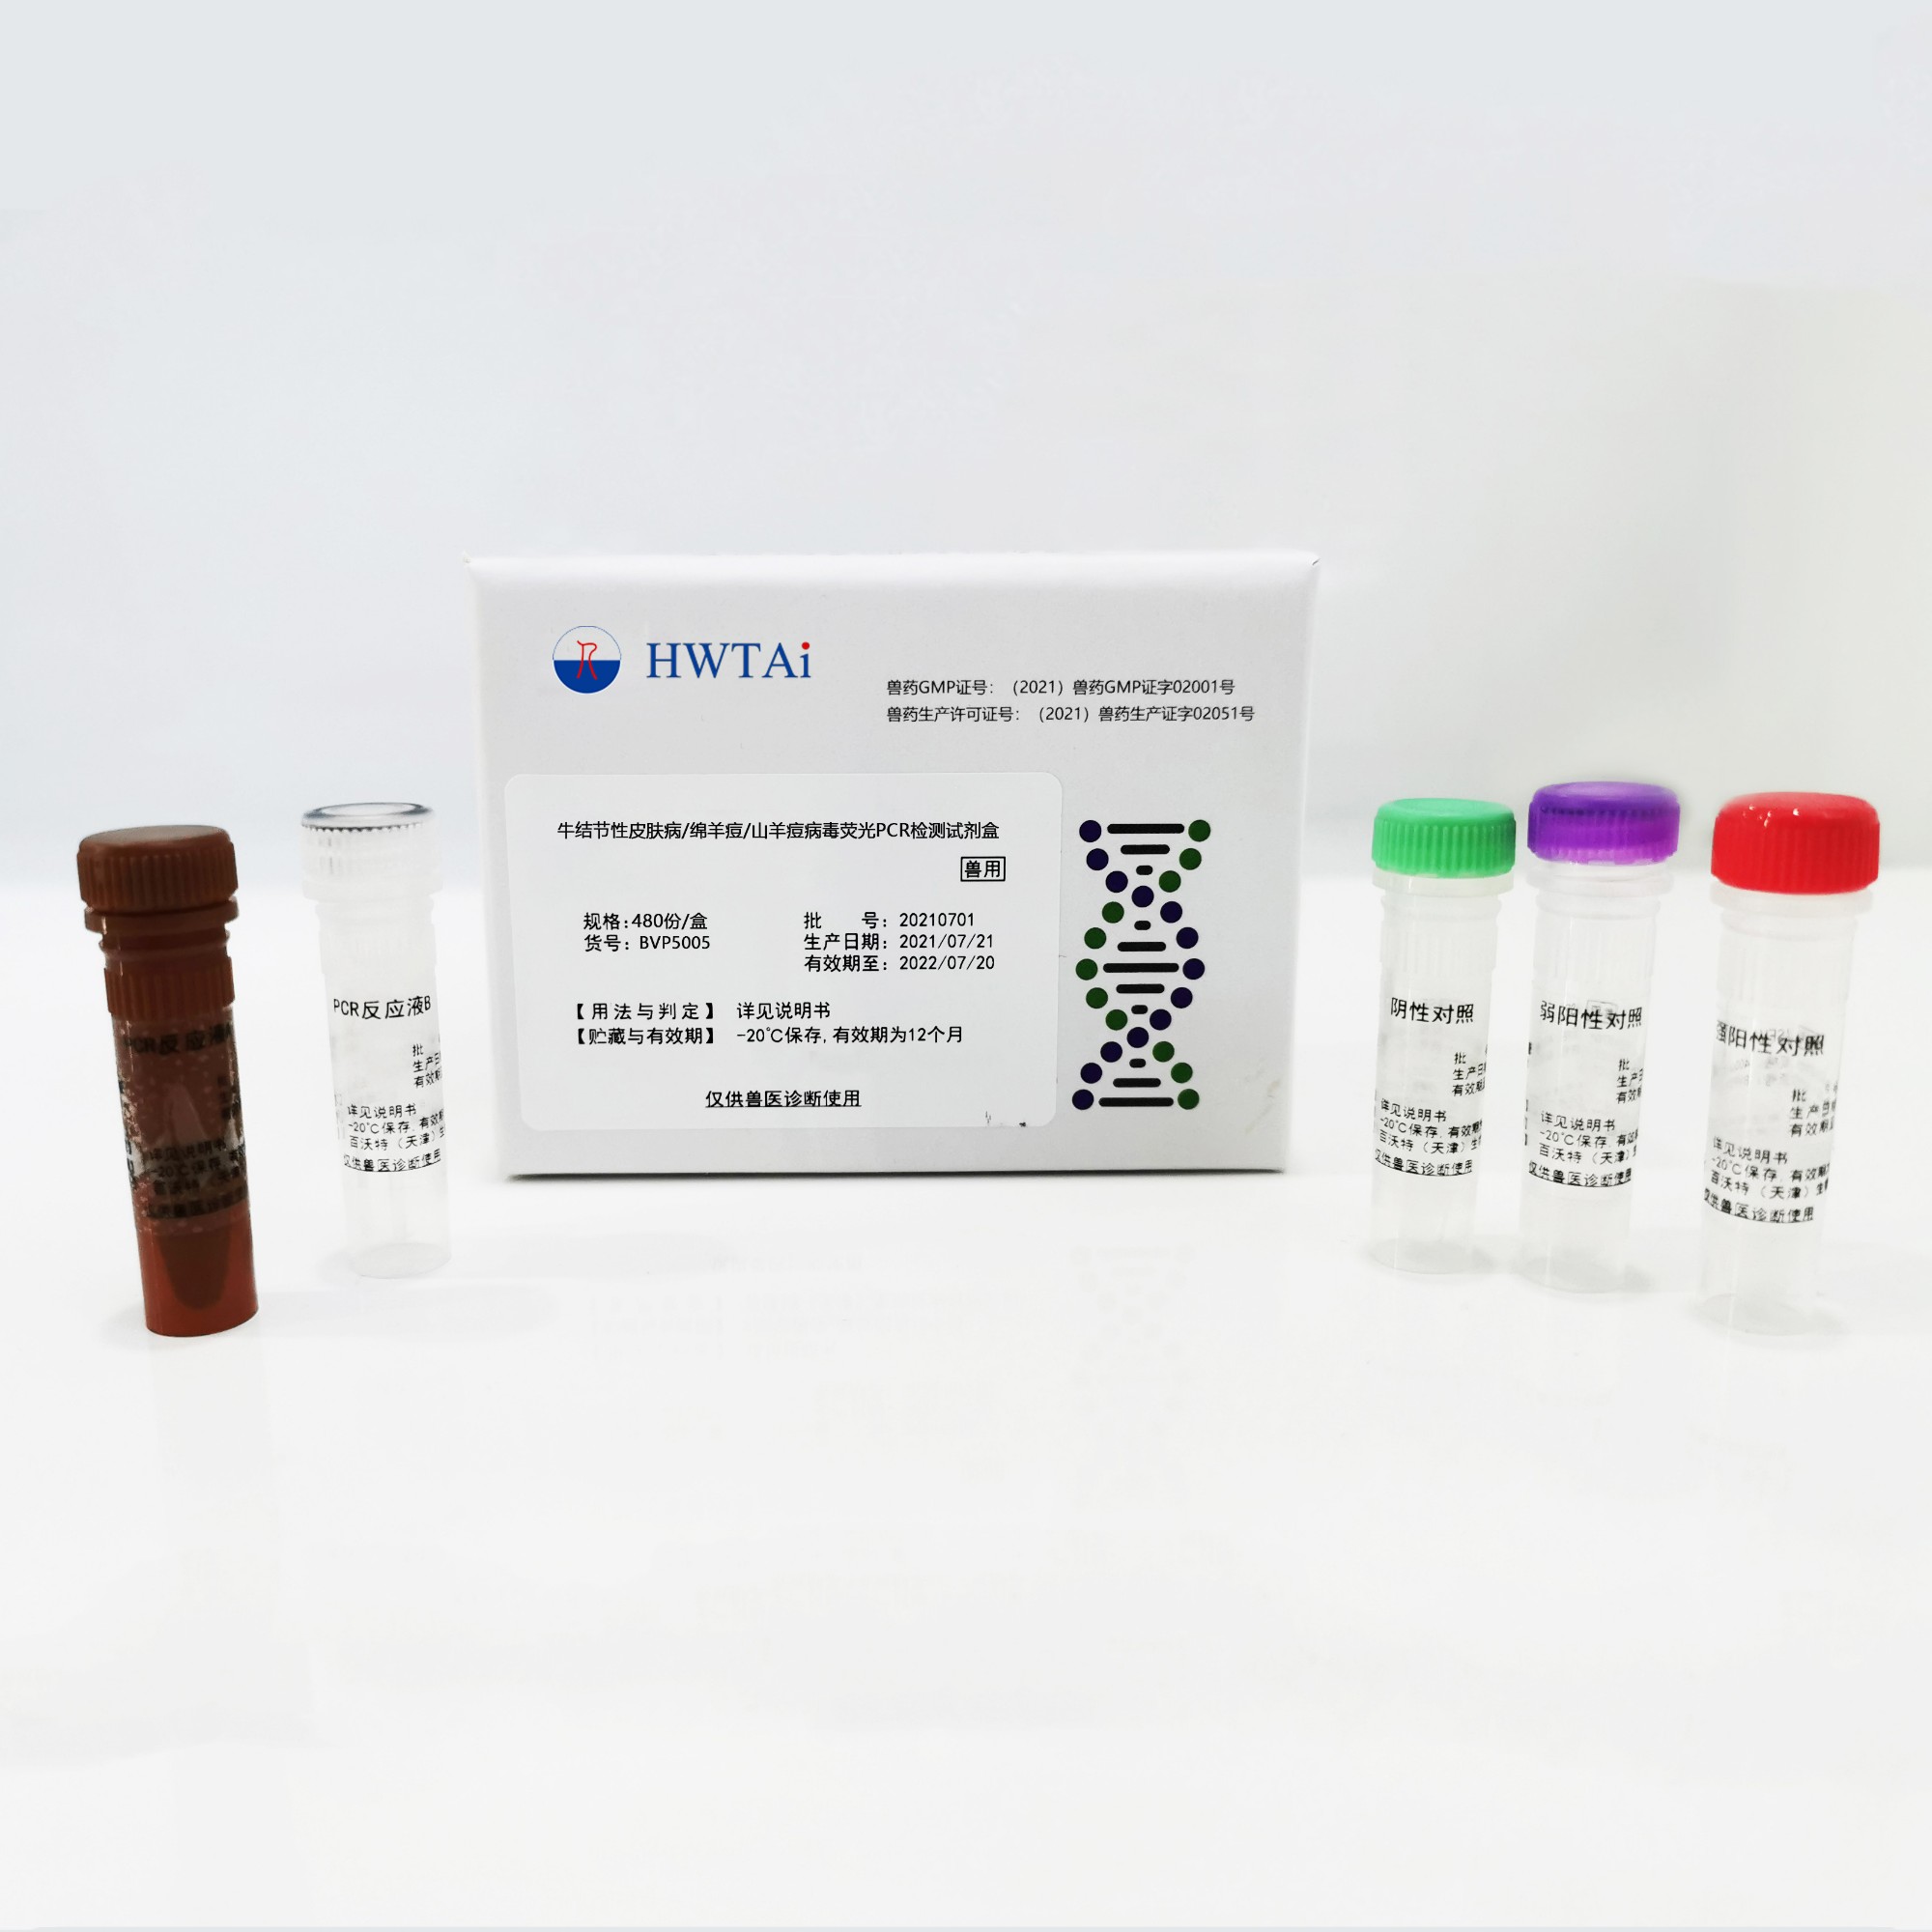 Bovine nodular dermatosis/sheep pox/goat pox virus fluorescent PCR detection kit